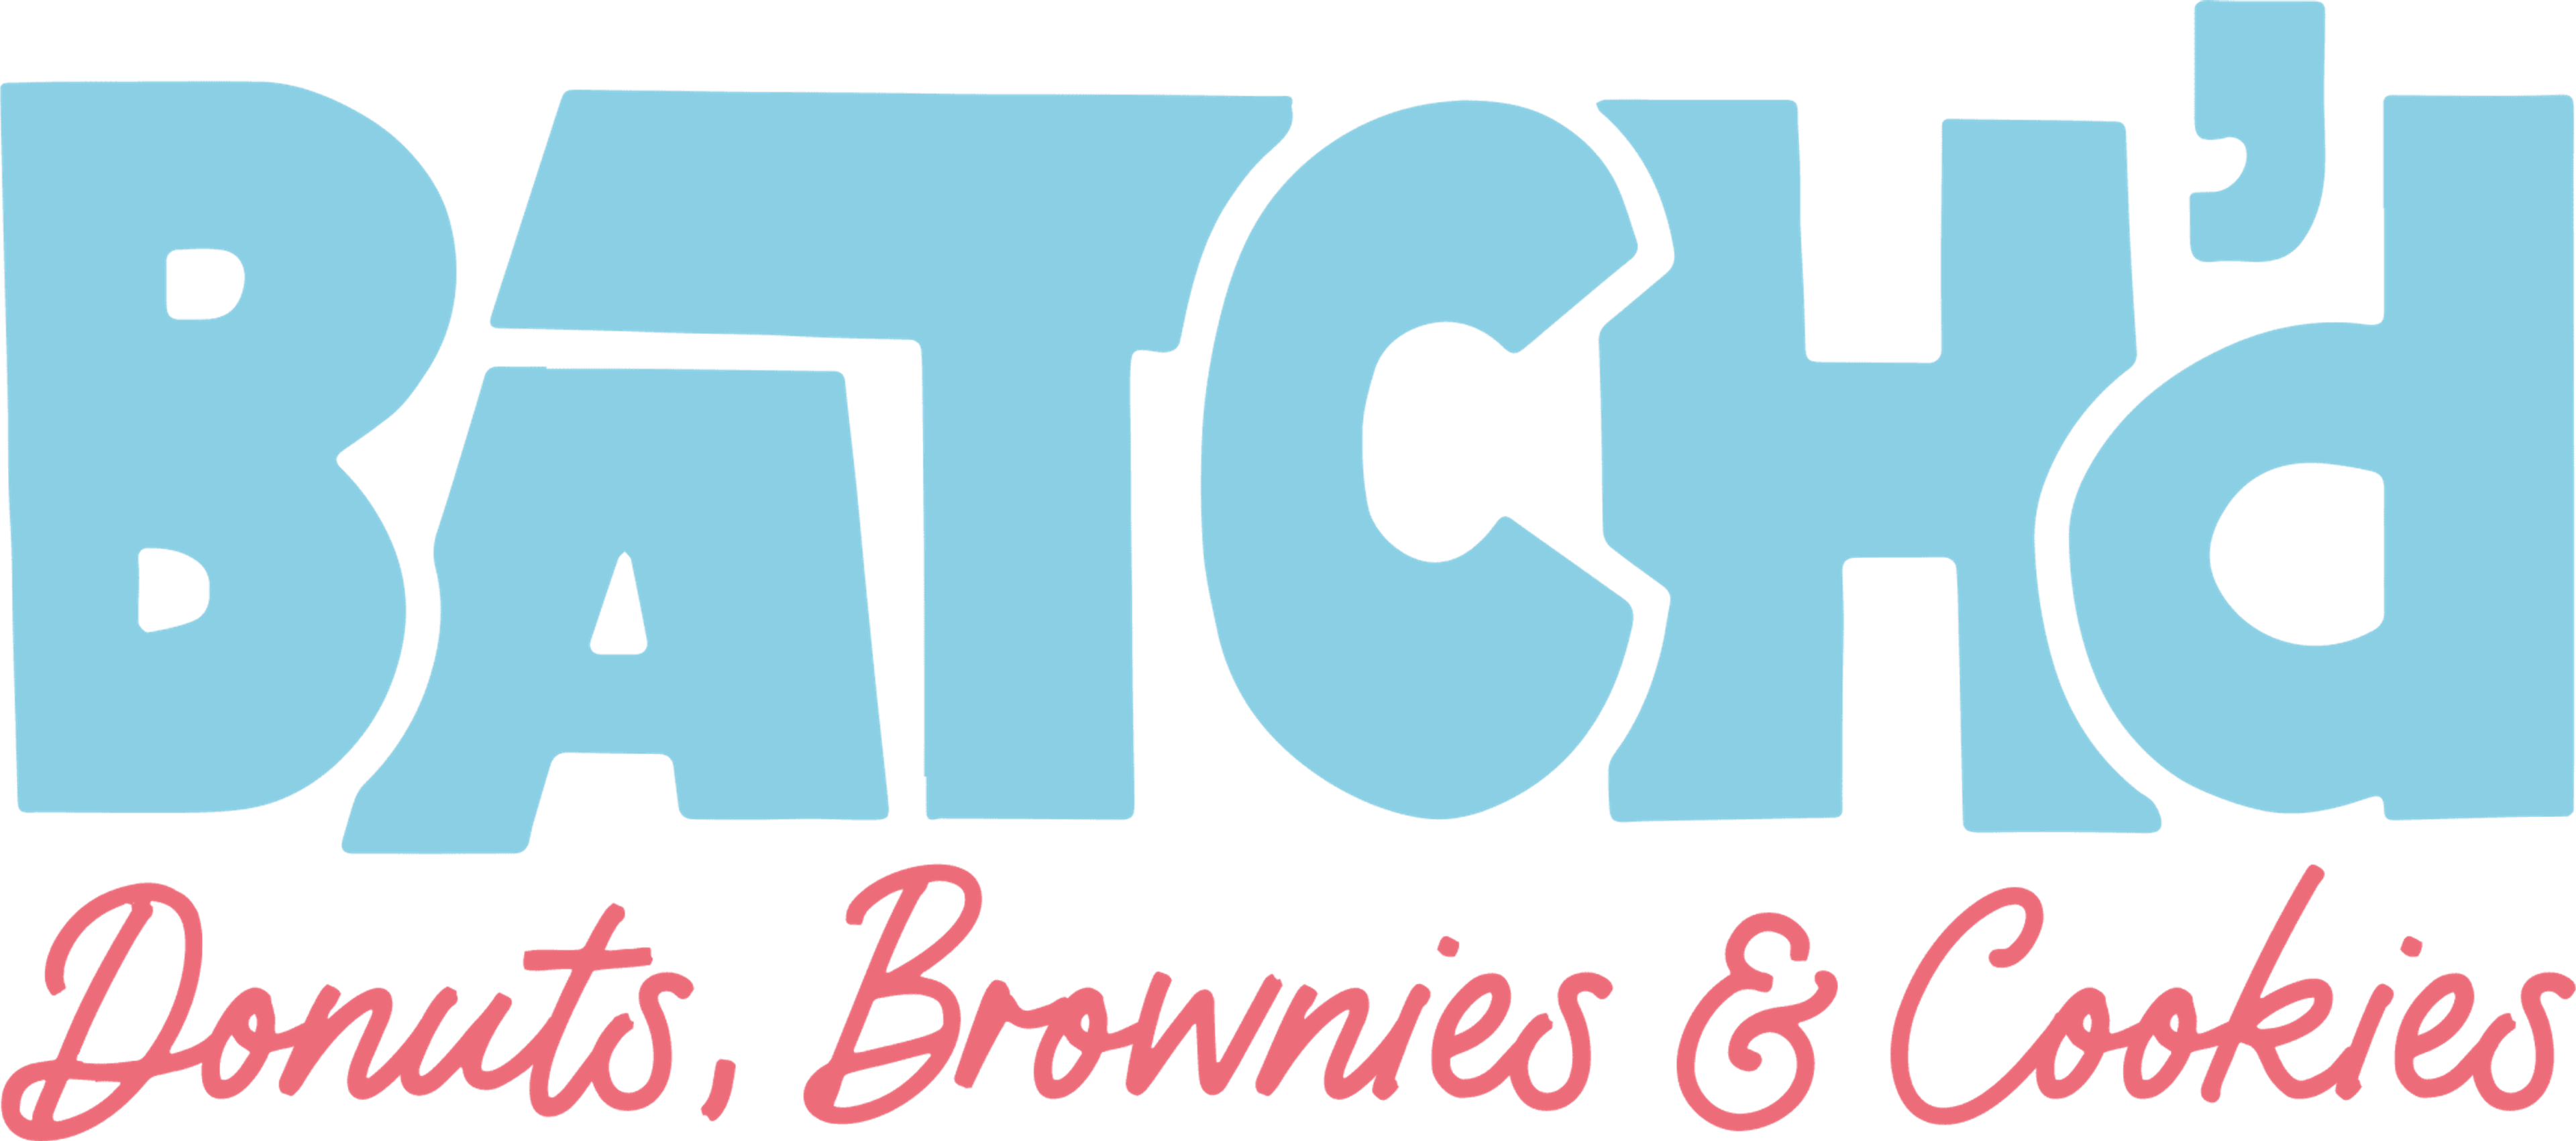 Logo for Batch'd